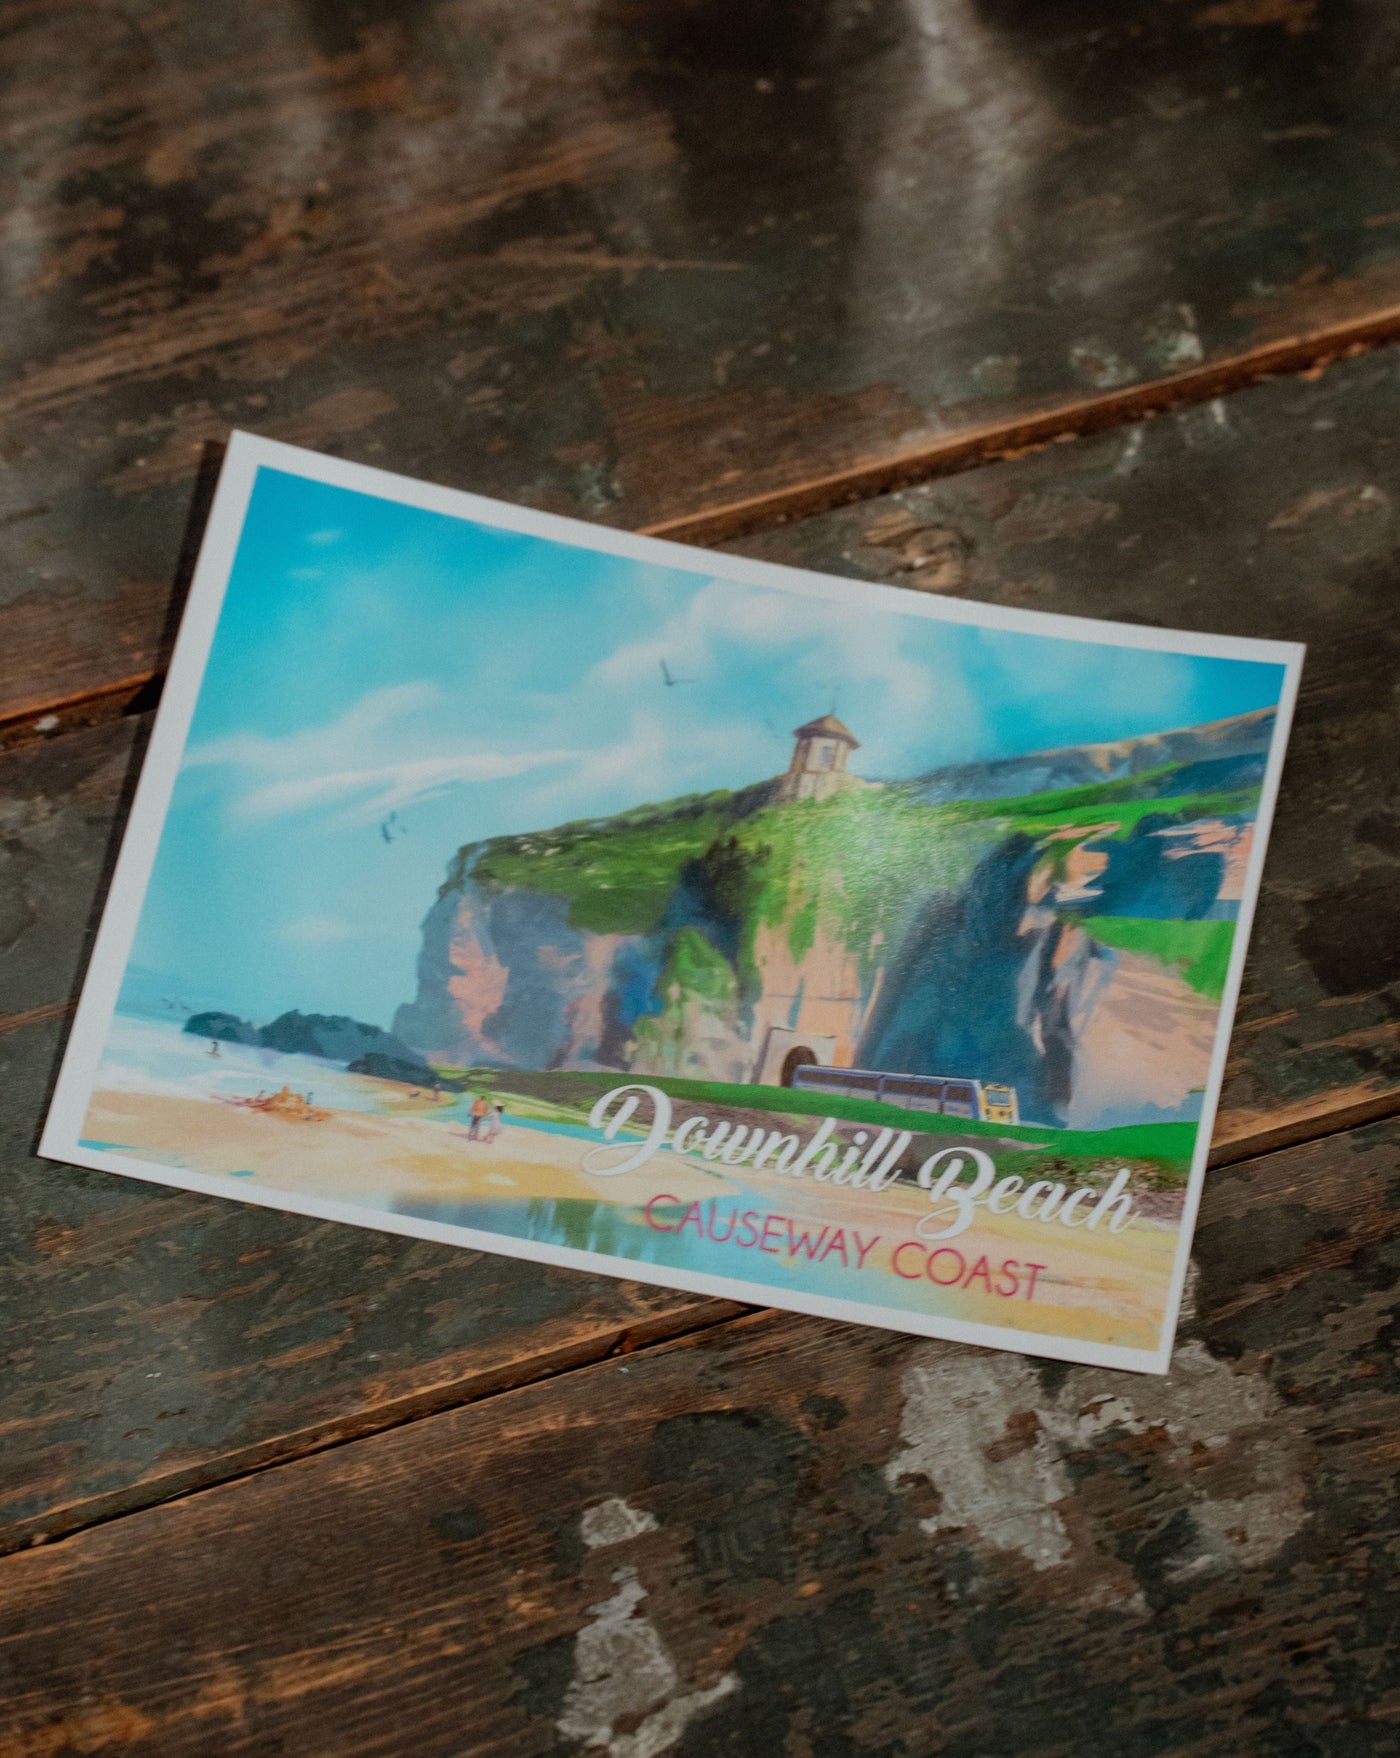 Downhill Beach Postcard